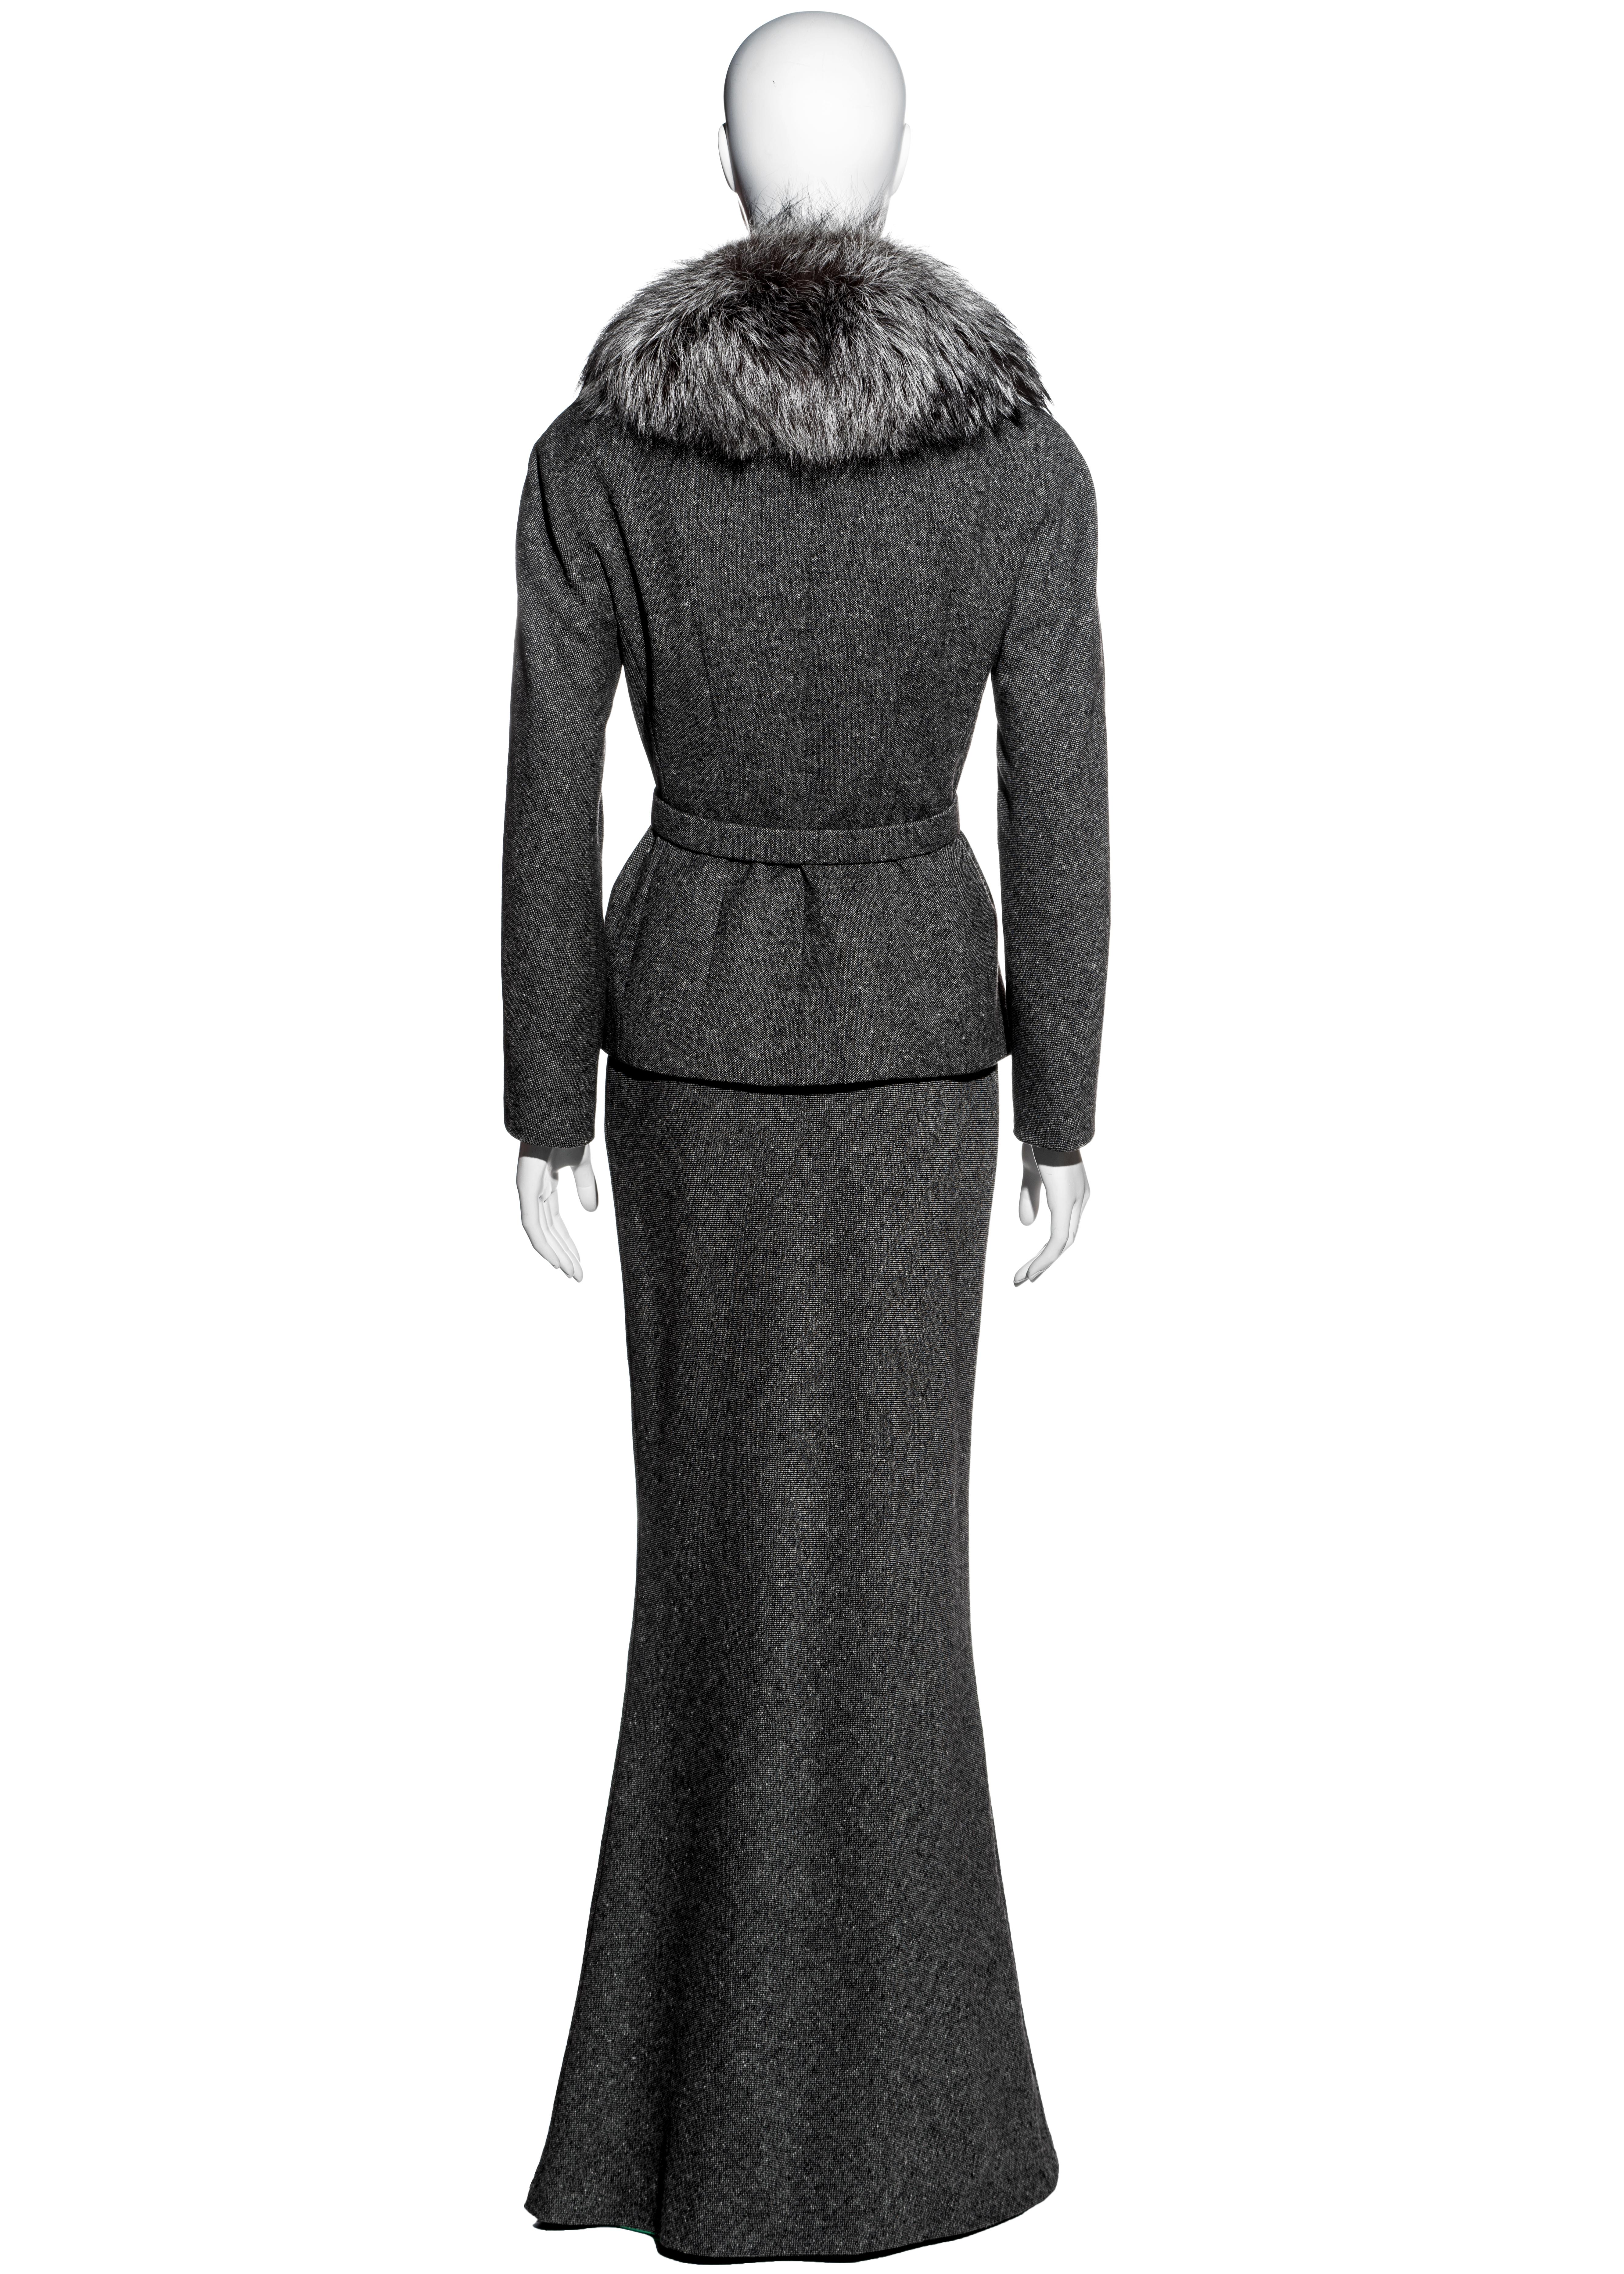 Christian Dior by John Galliano grey tweed maxi skirt suit with fox fur, fw 1998 2